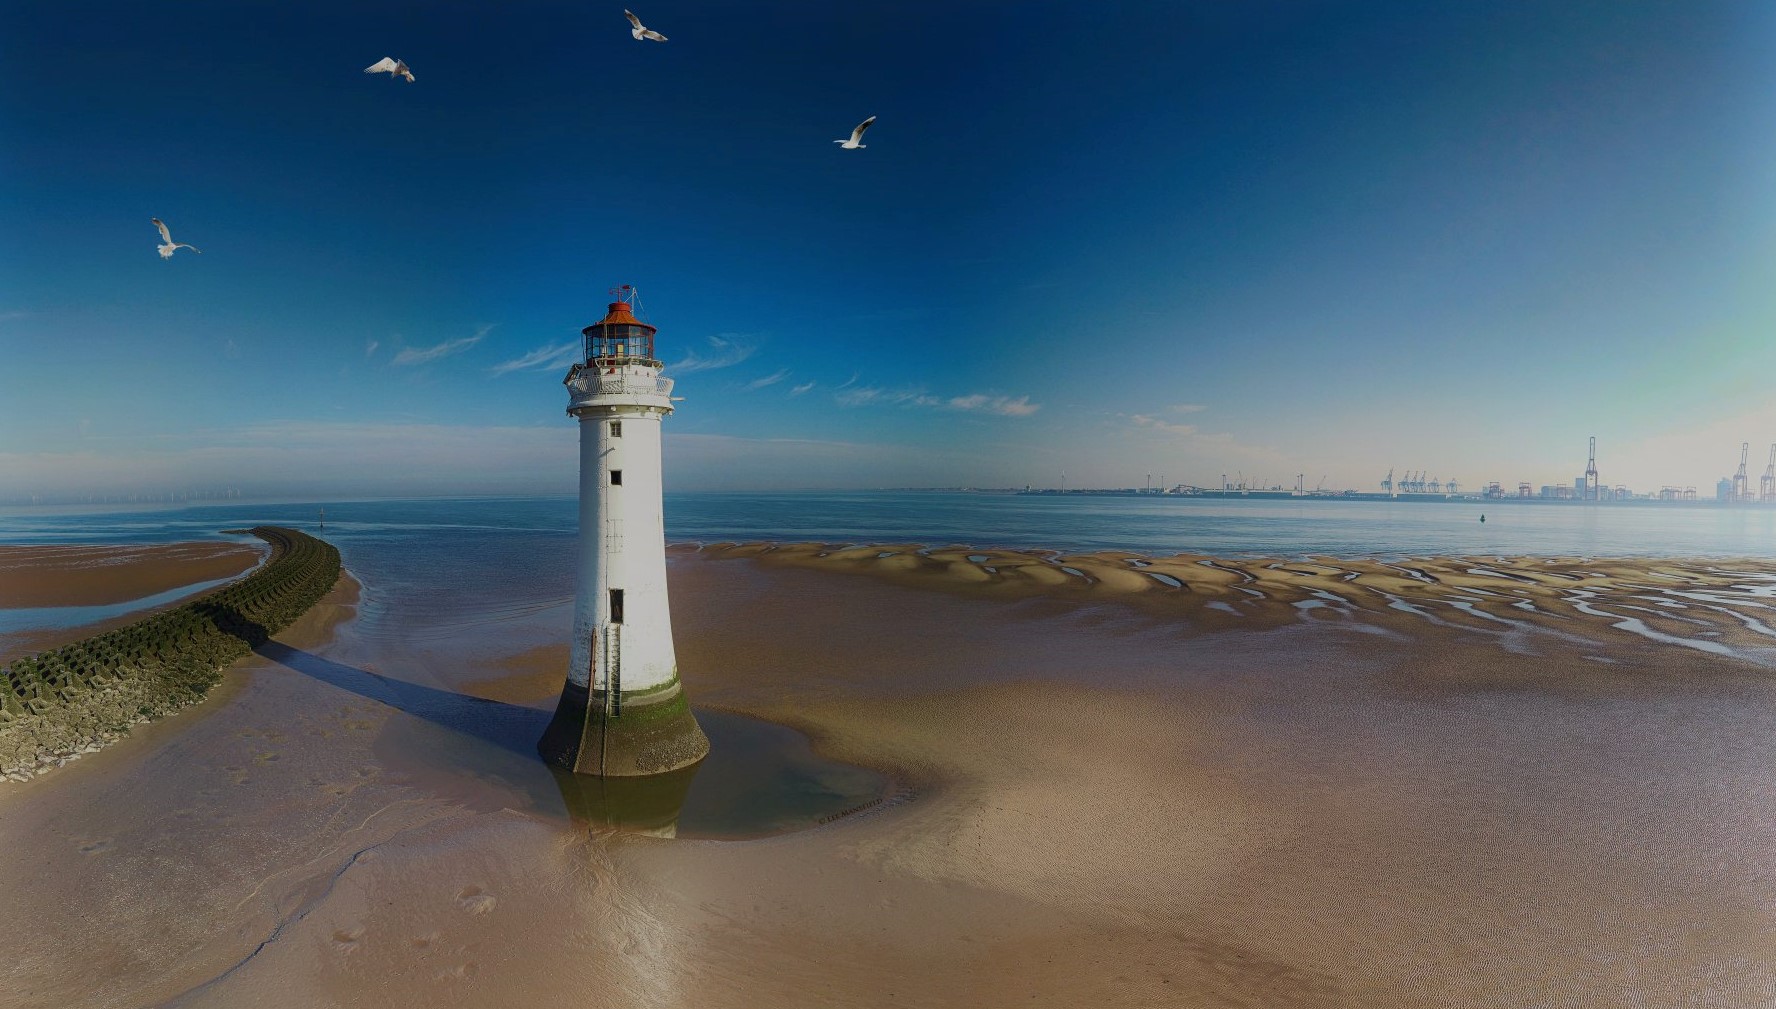 New Brighton Lighthouse - Perch Rock